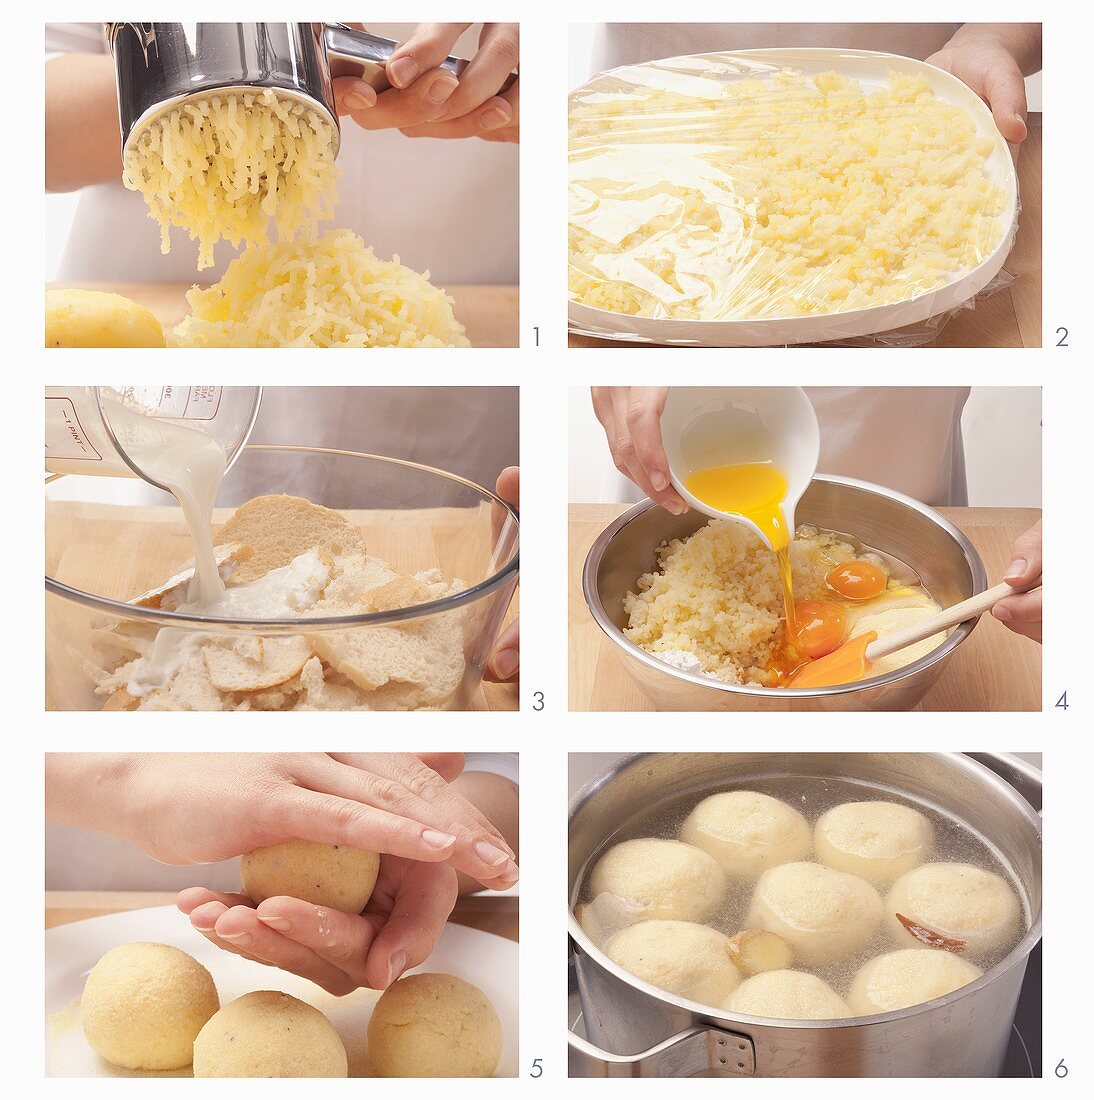 Potato and bread dumplings being prepared